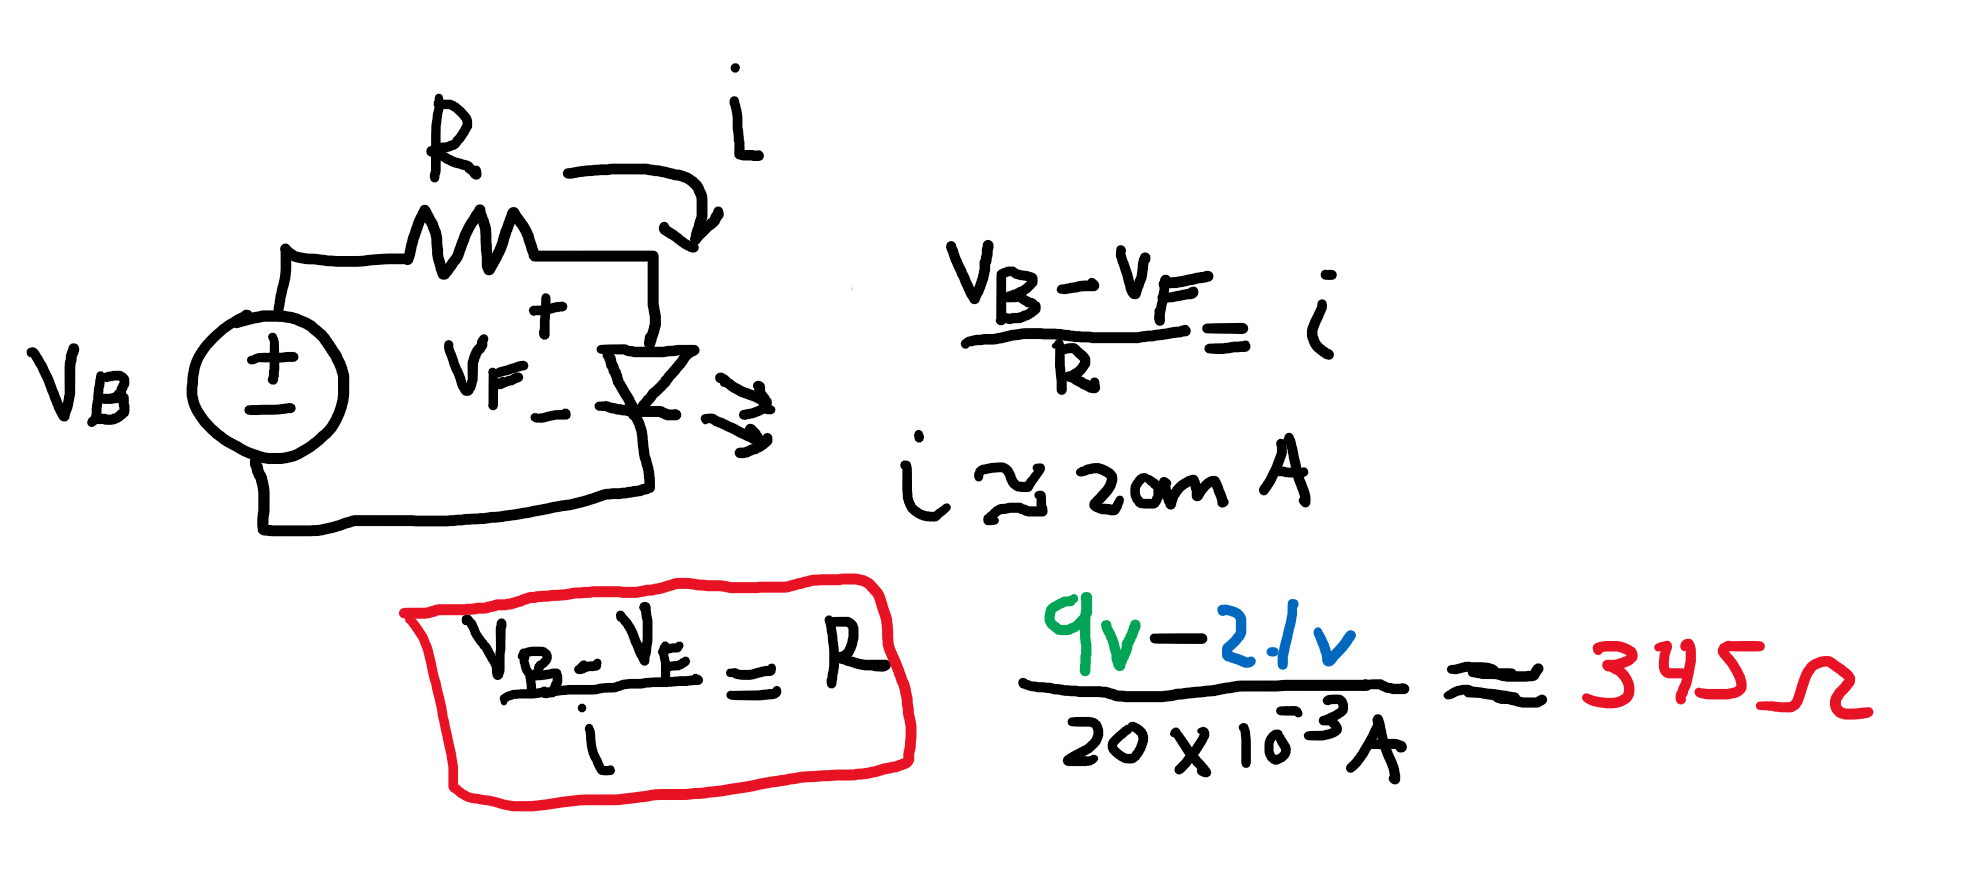 derivation for led resistor